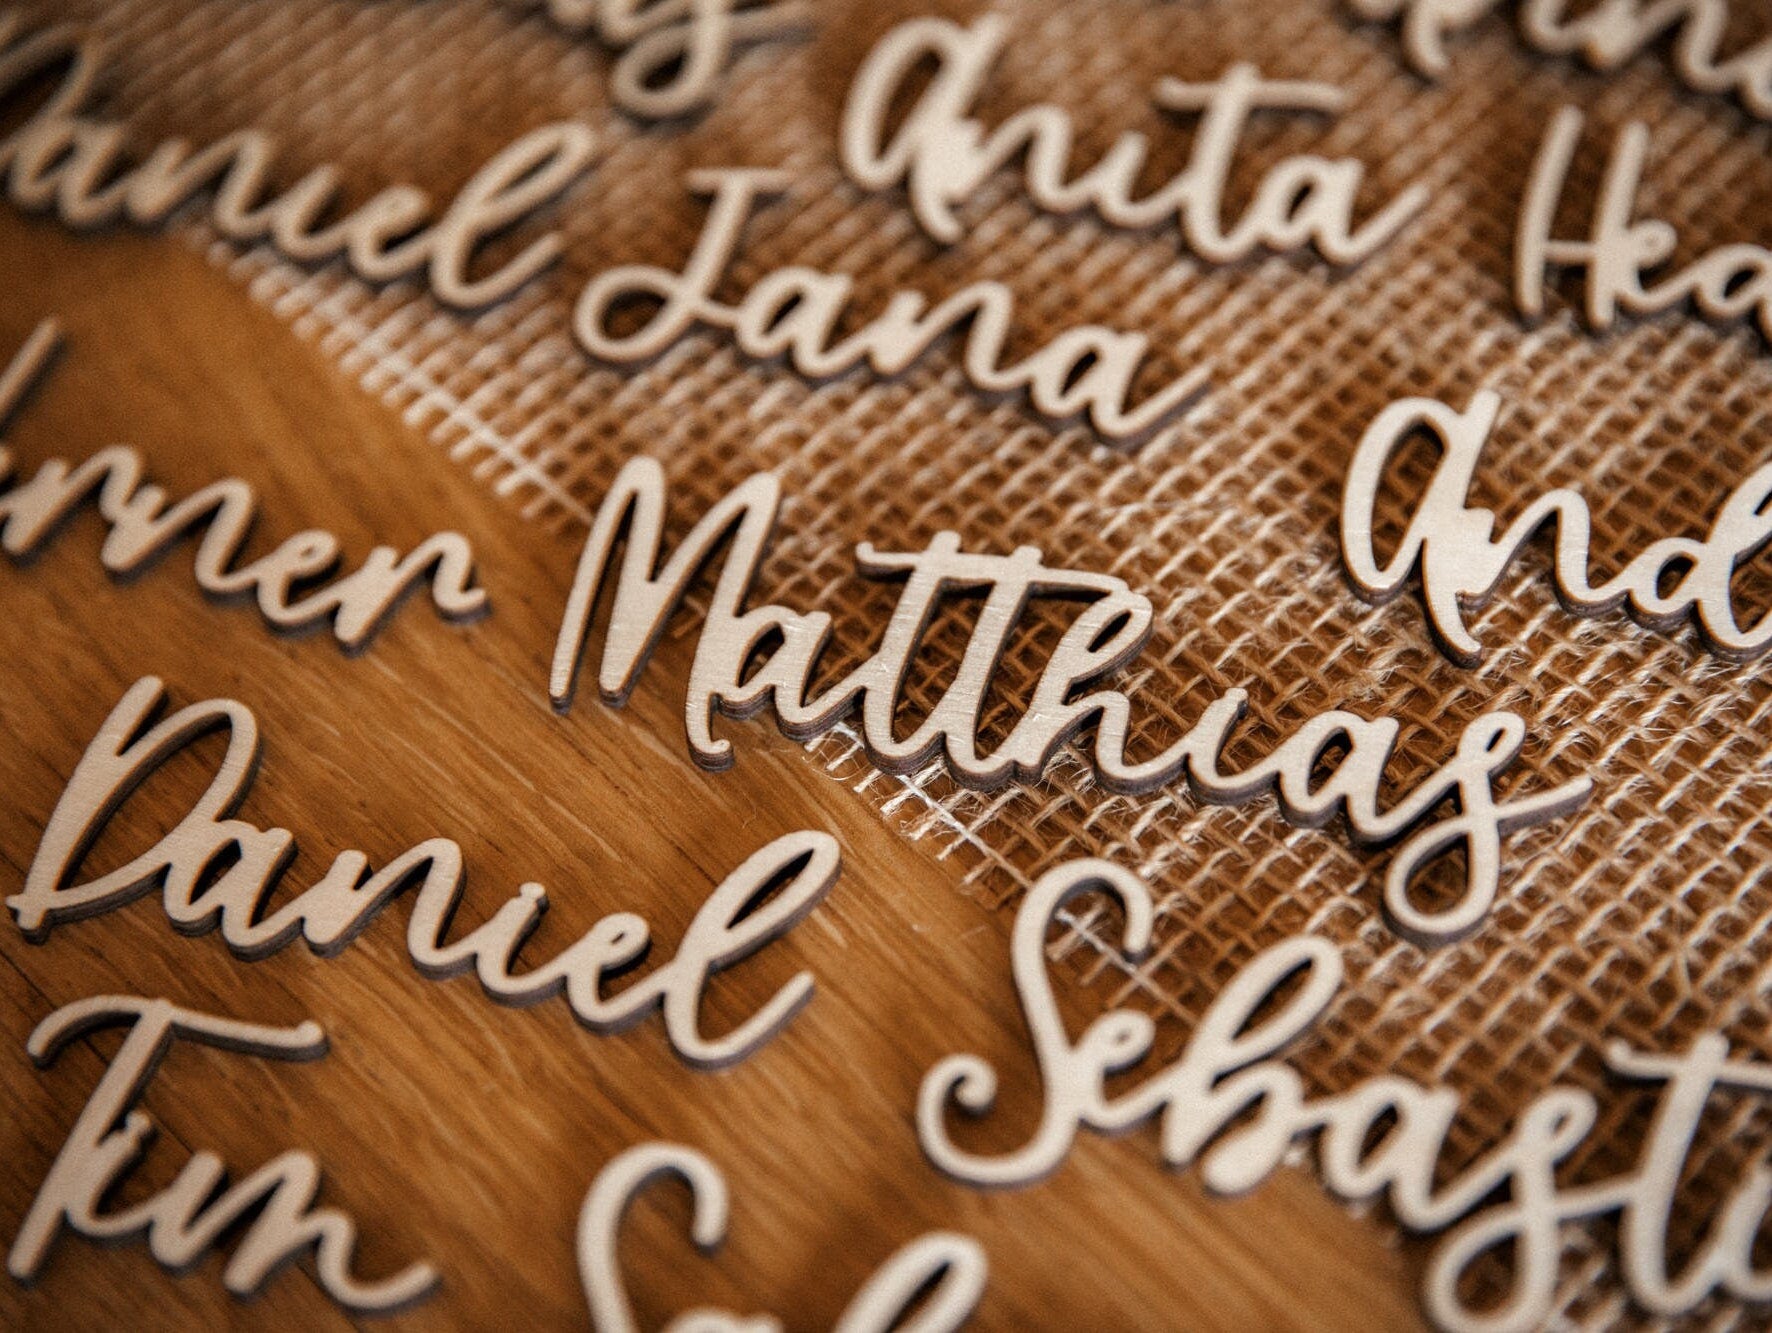 Hochzeit Tischkarten Schriftzug aus Holz / Platzkarten aus Birke